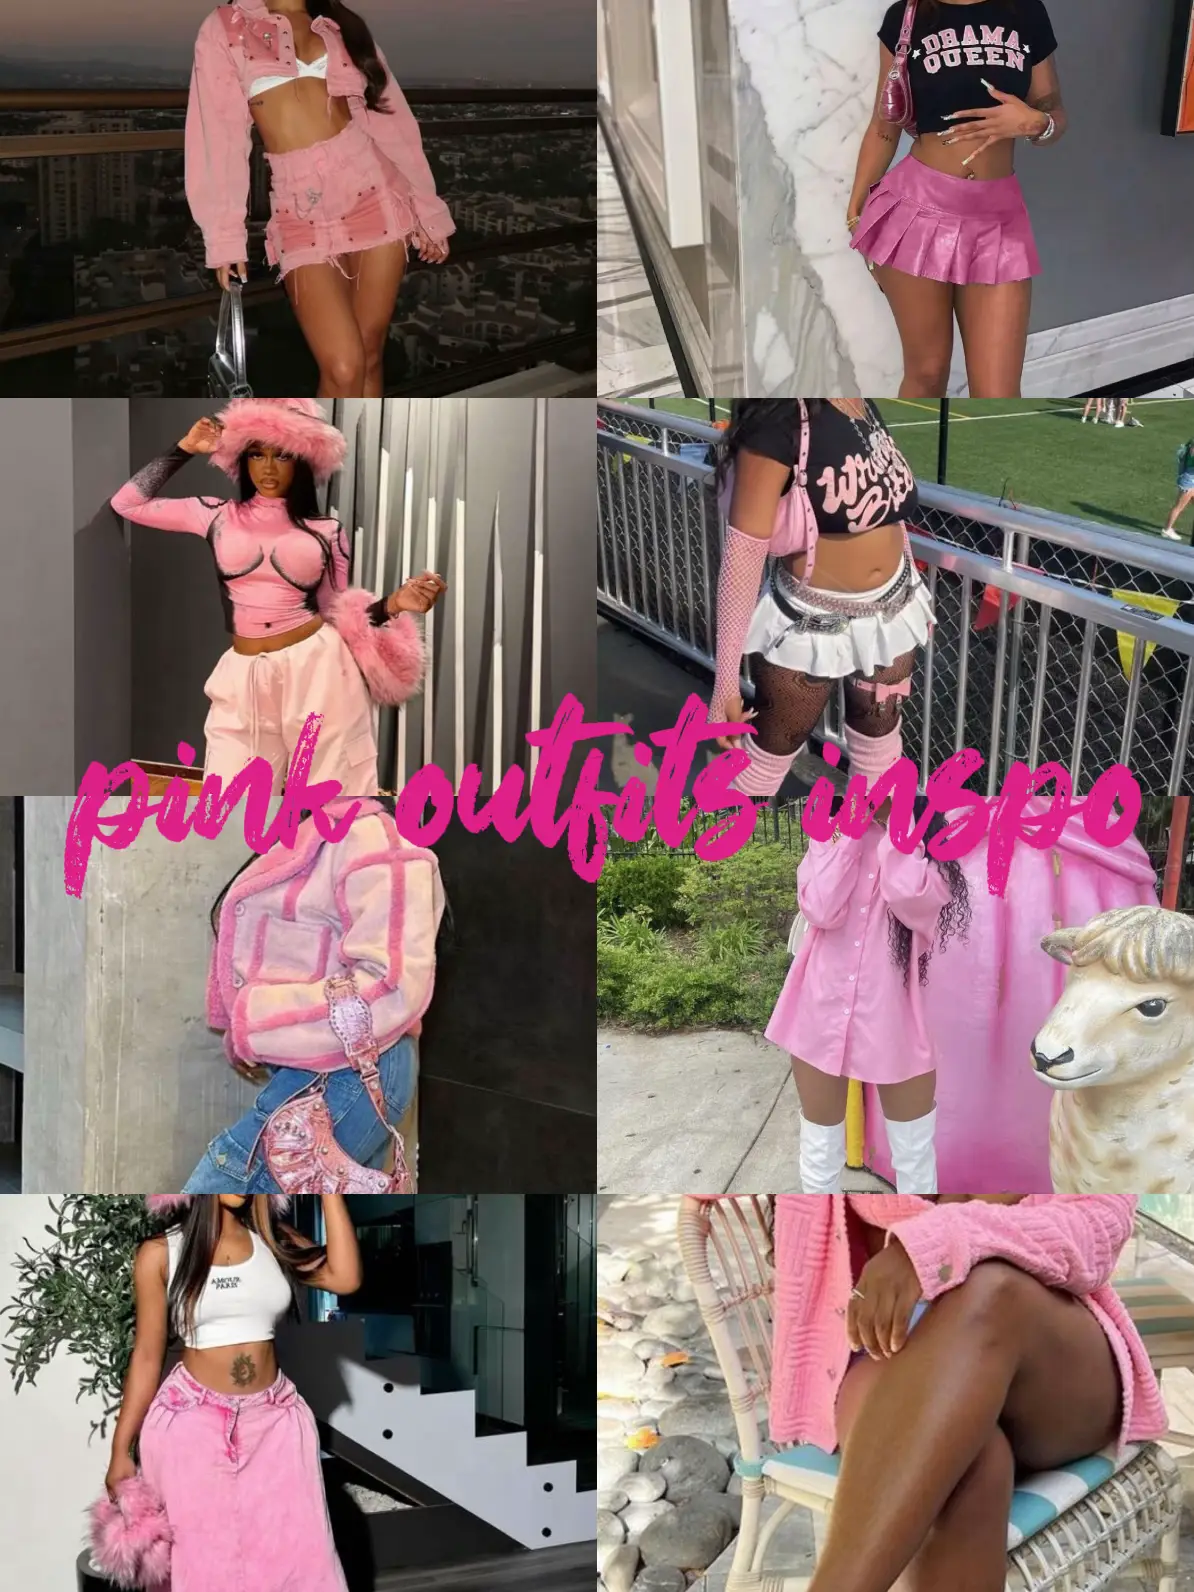 Joshine on Instagram: Soooo Cute🥰This pink shapewear can be an